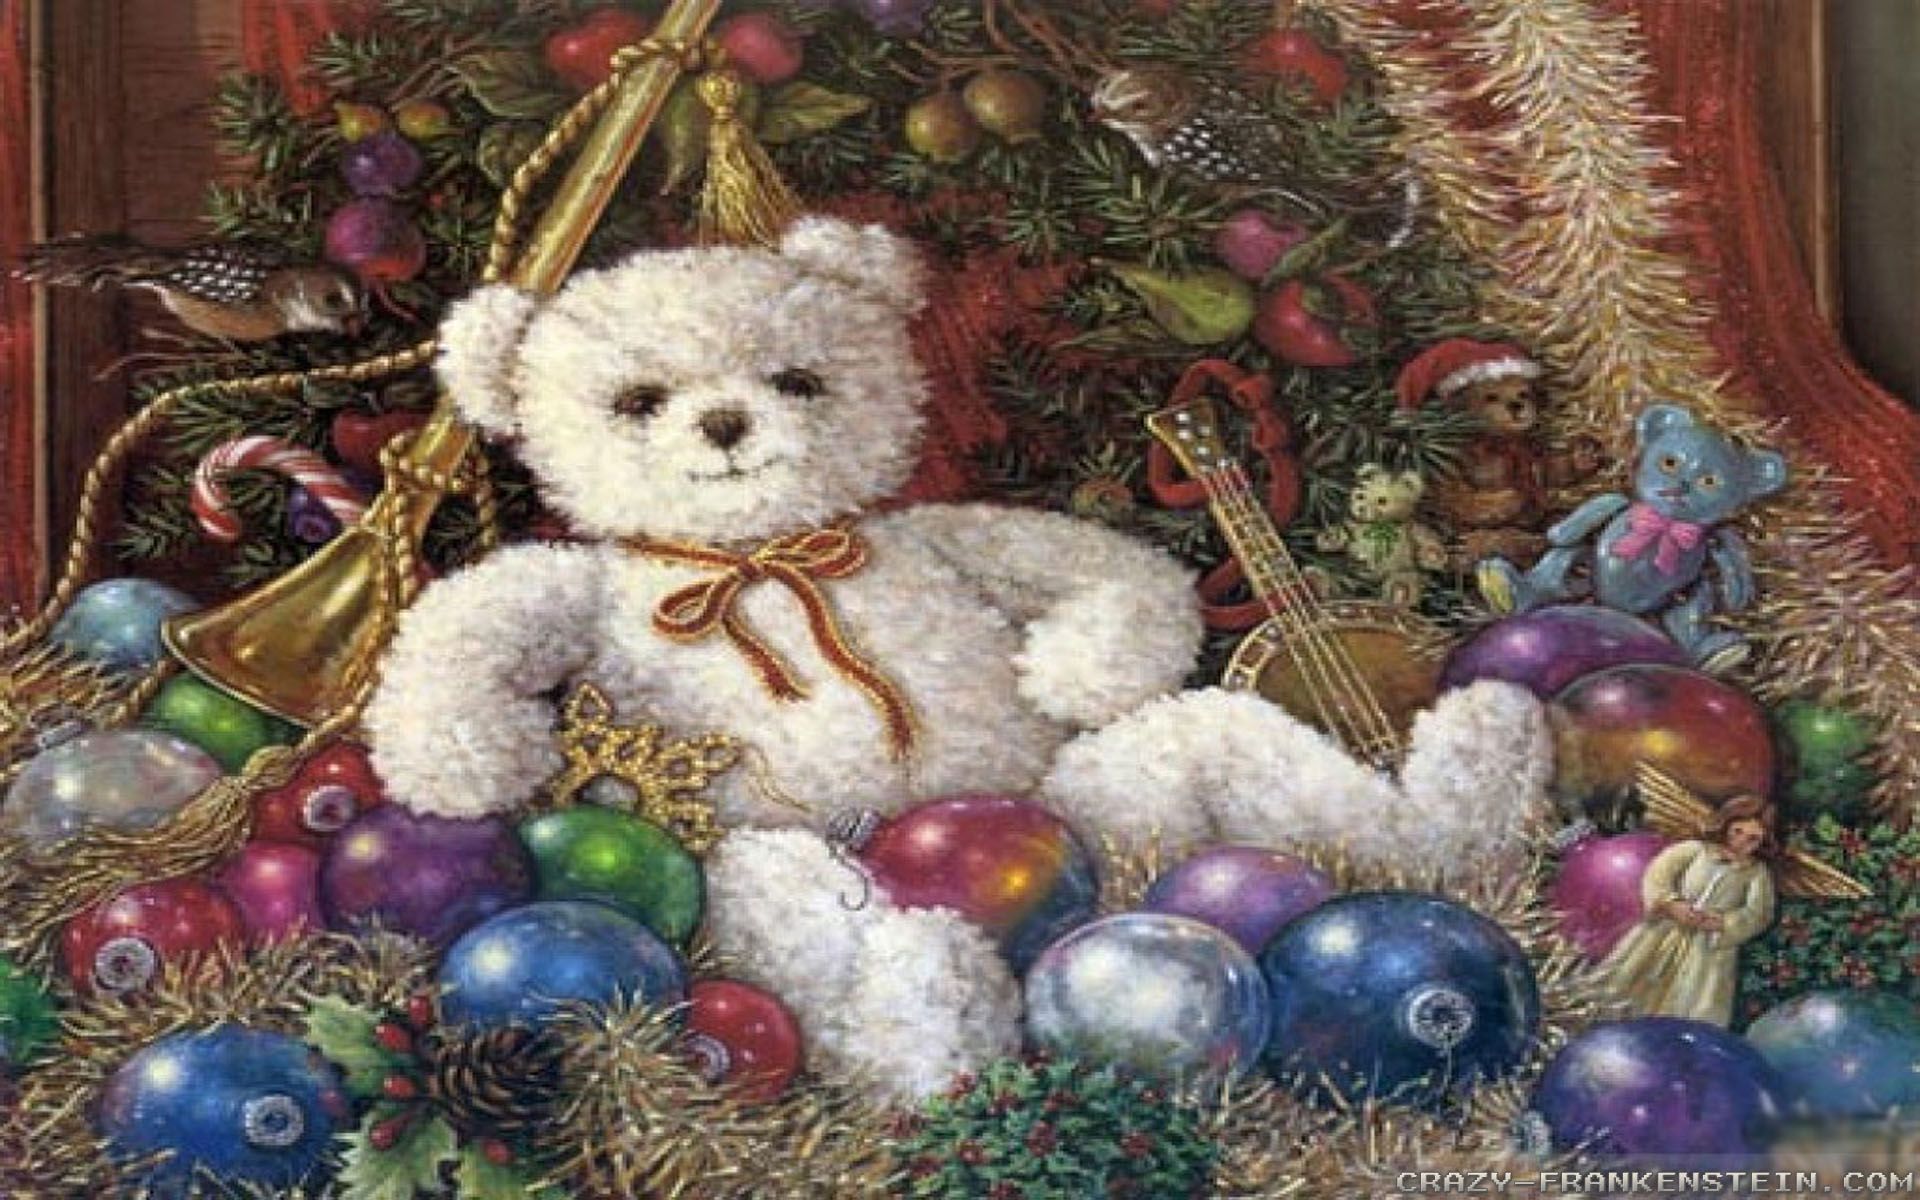 Christmas Bear wallpaper